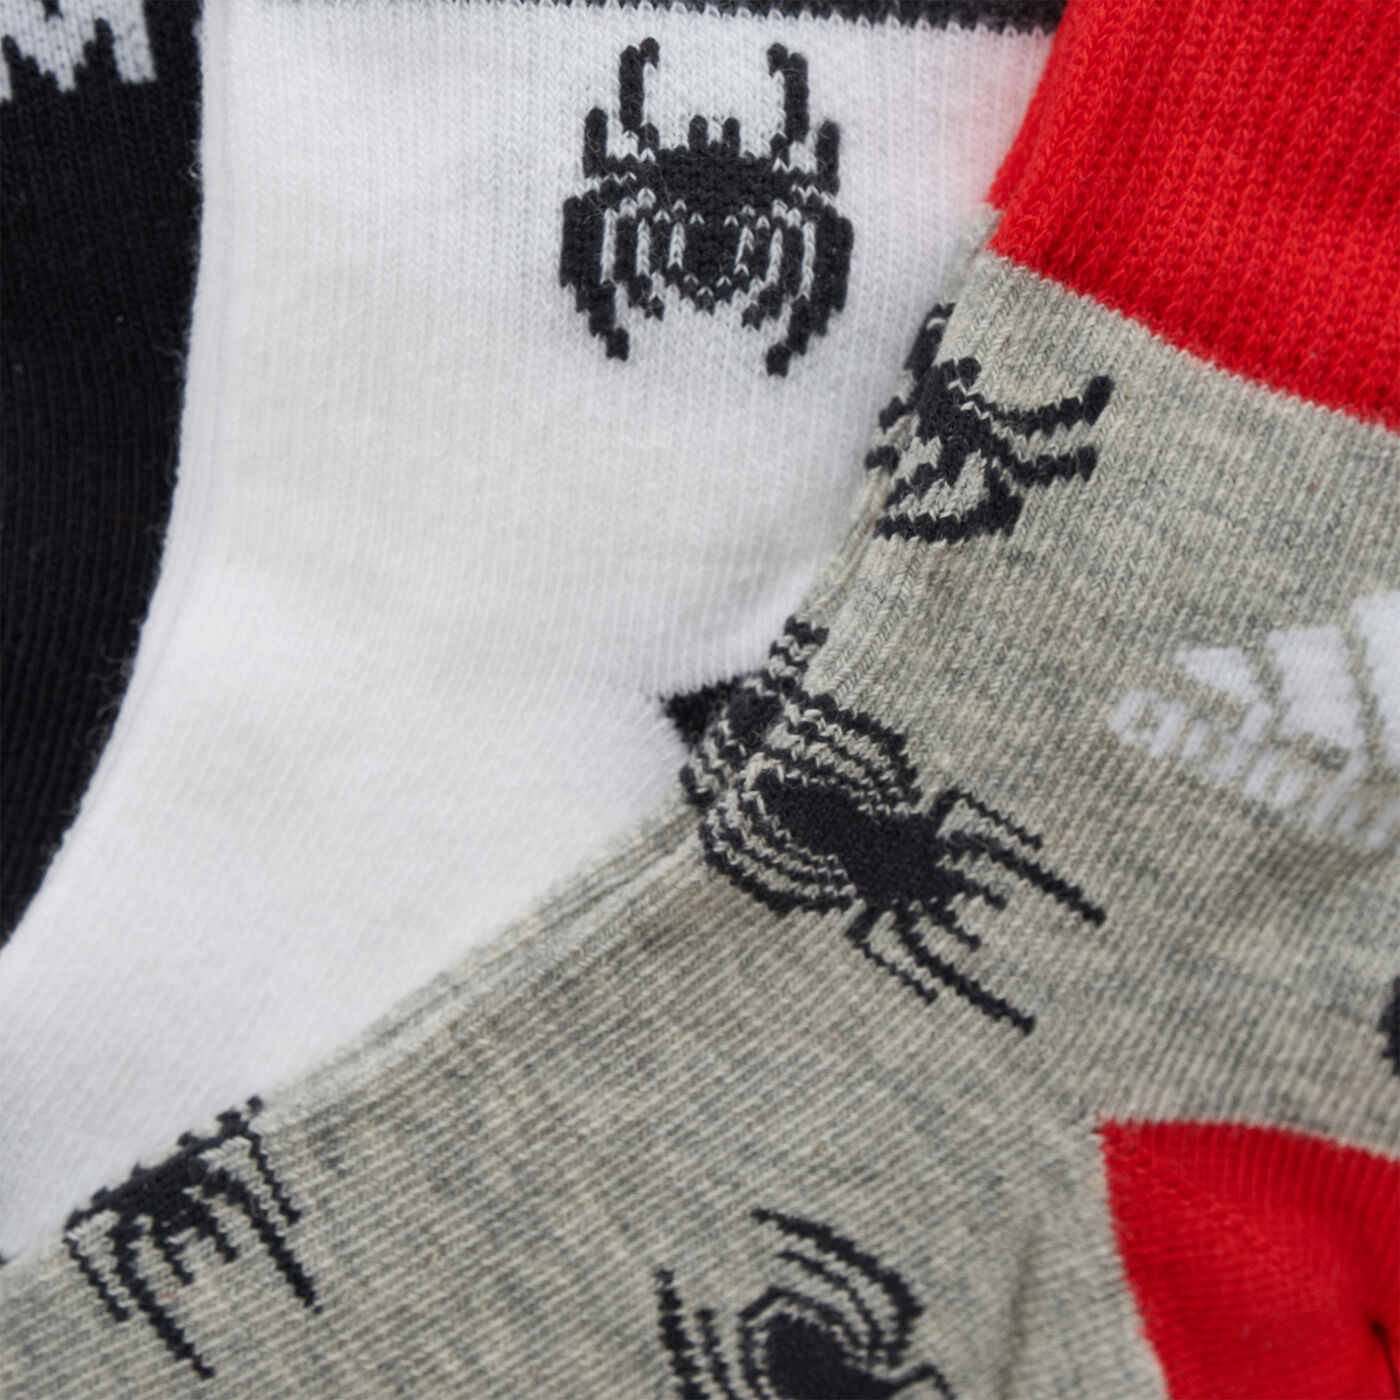 Kids’ Marvel Spider-Man Socks (3 Pairs) (Younger Kids)